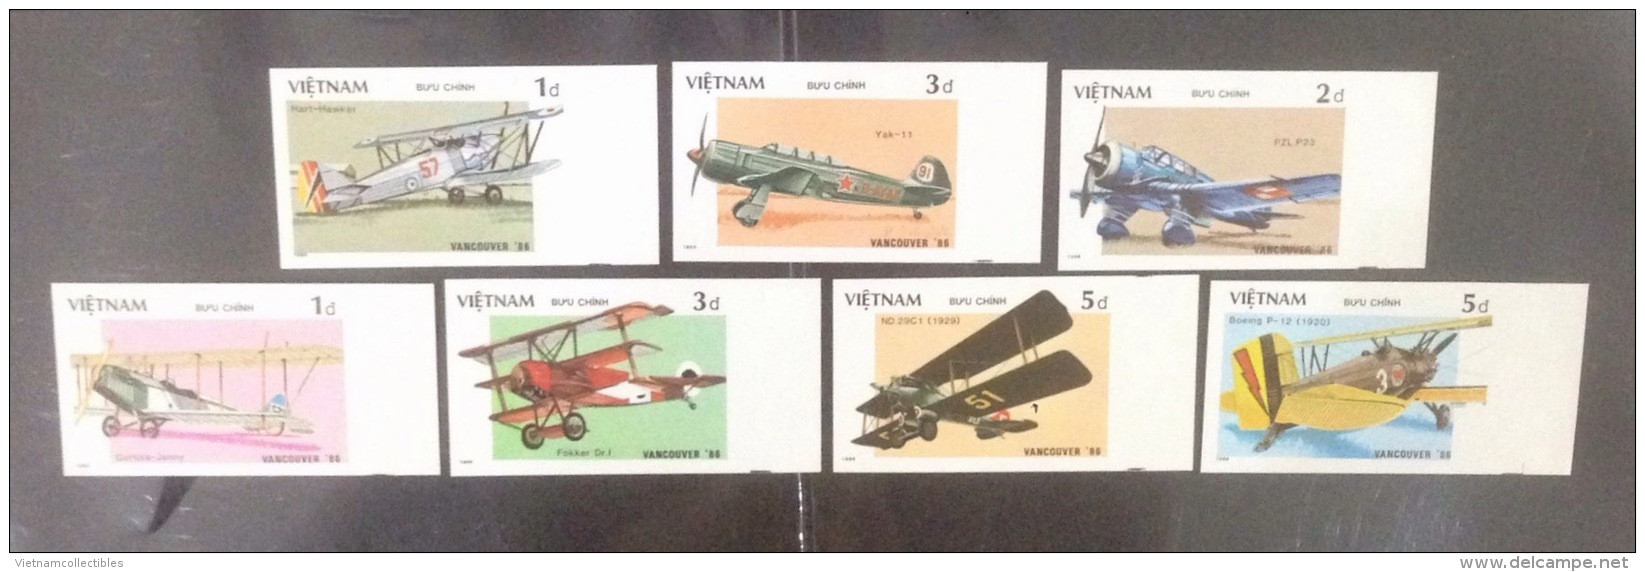 Vietnam Viet Nam MNH Imperf Stamps 1986 : "EXPO-86" World Fair Vancouver - Canada / Ancient Airplane (Ms491) - Viêt-Nam